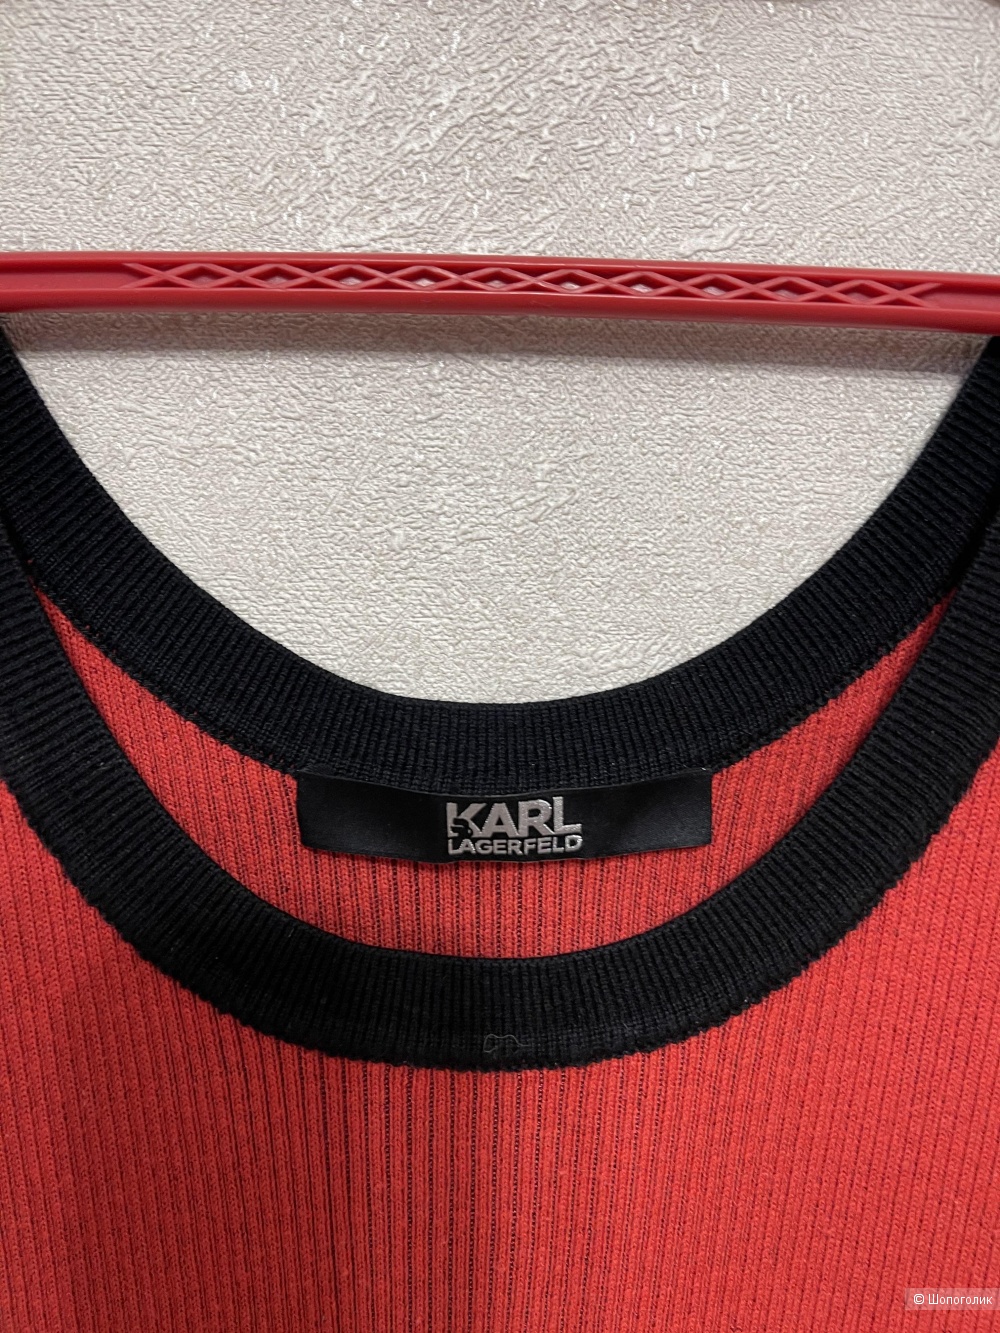 Топ Karl Lagerfeld размер XS